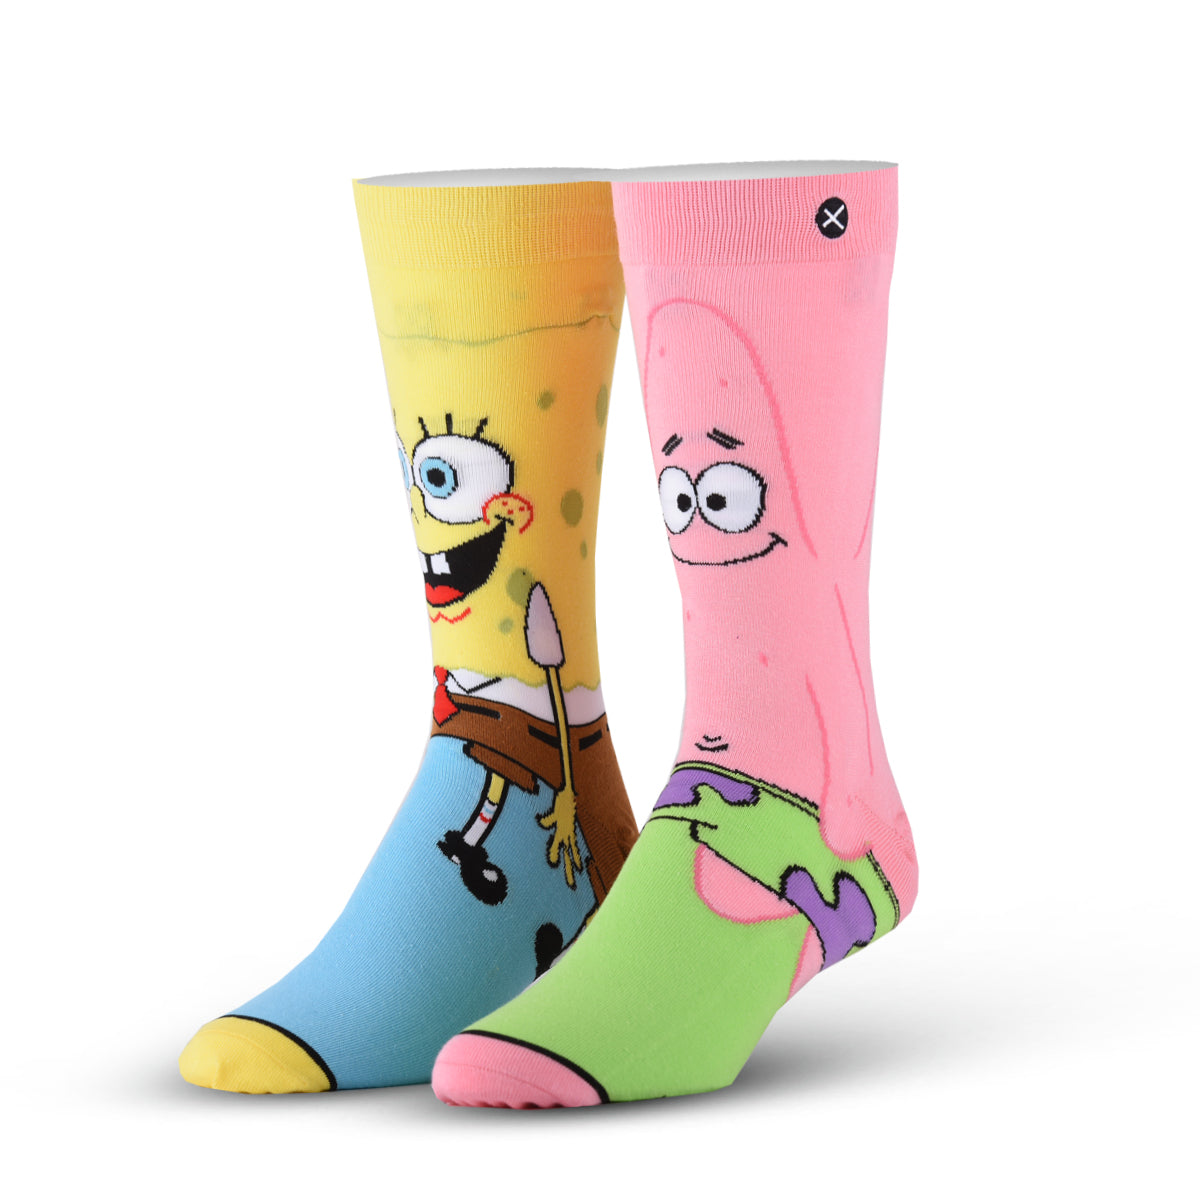 Spongebob Patrick Star Socks Stockings Cotton socks Cartoon lovely